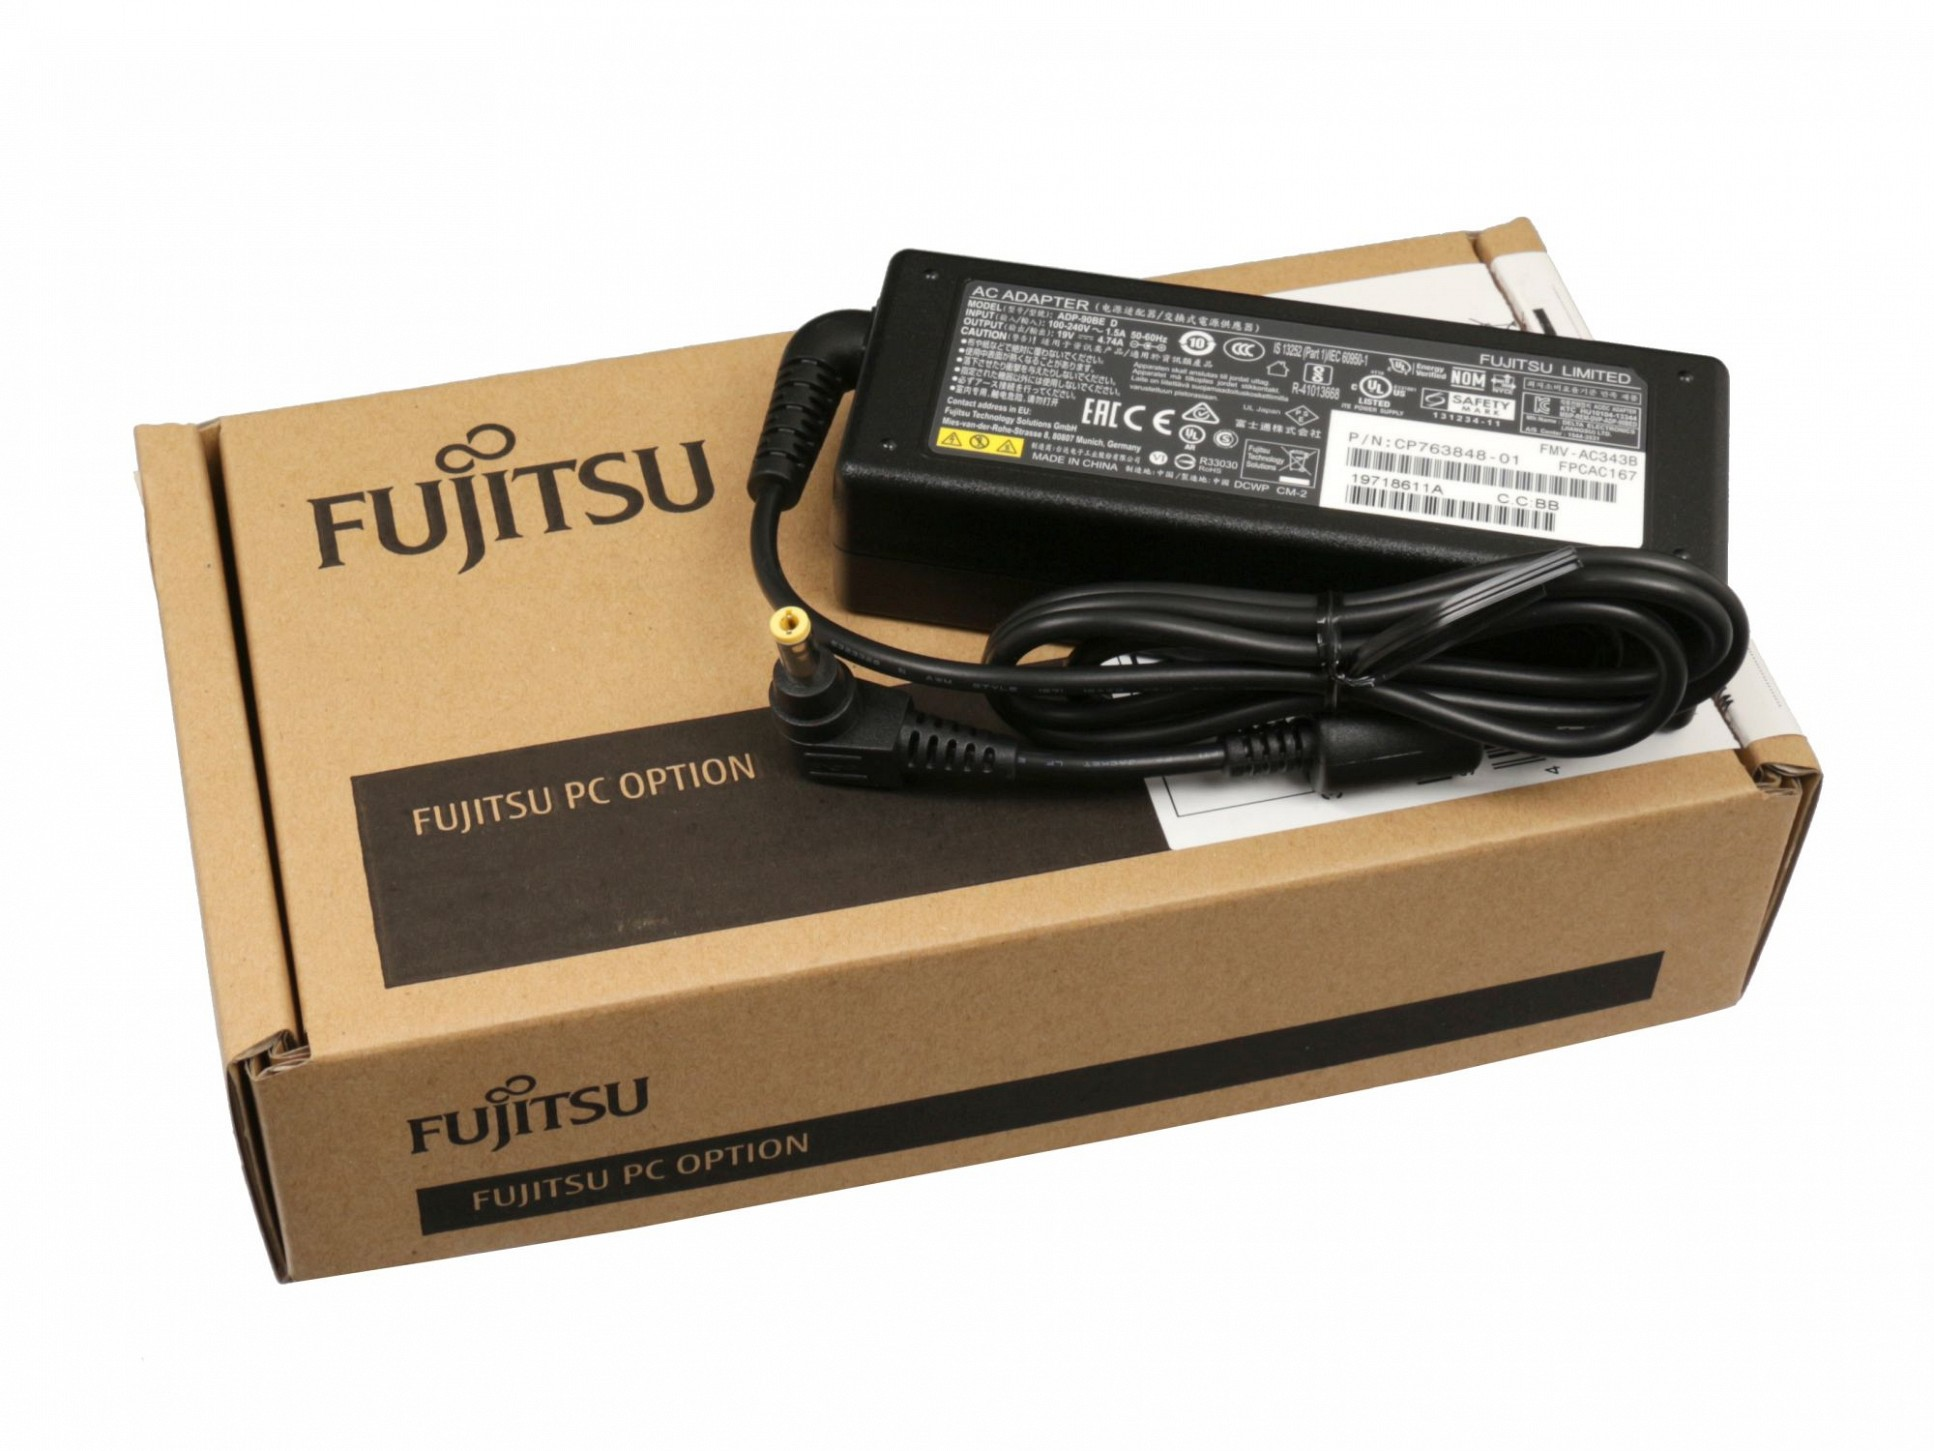 FUJITSU FMV-AC343A 90 Original Watt Netzteil